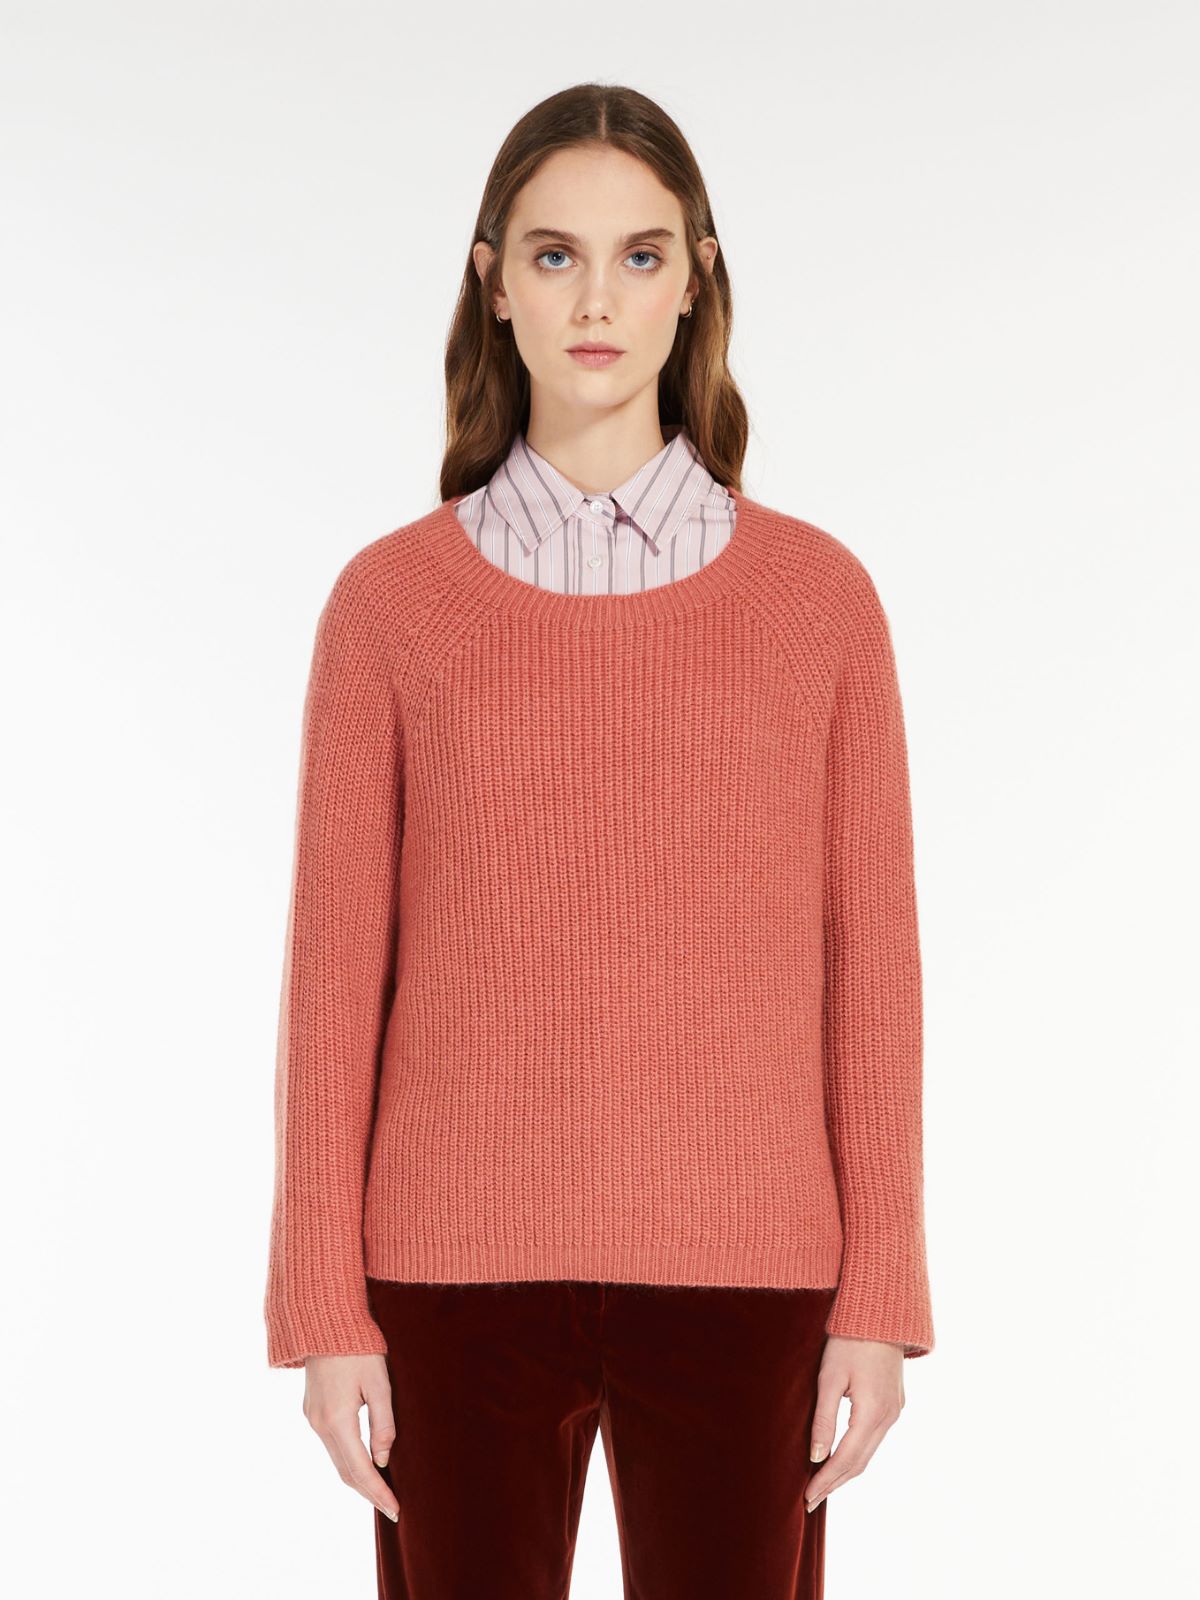 Mohair yarn sweater - ANTIQUE ROSE - Weekend Max Mara - 2